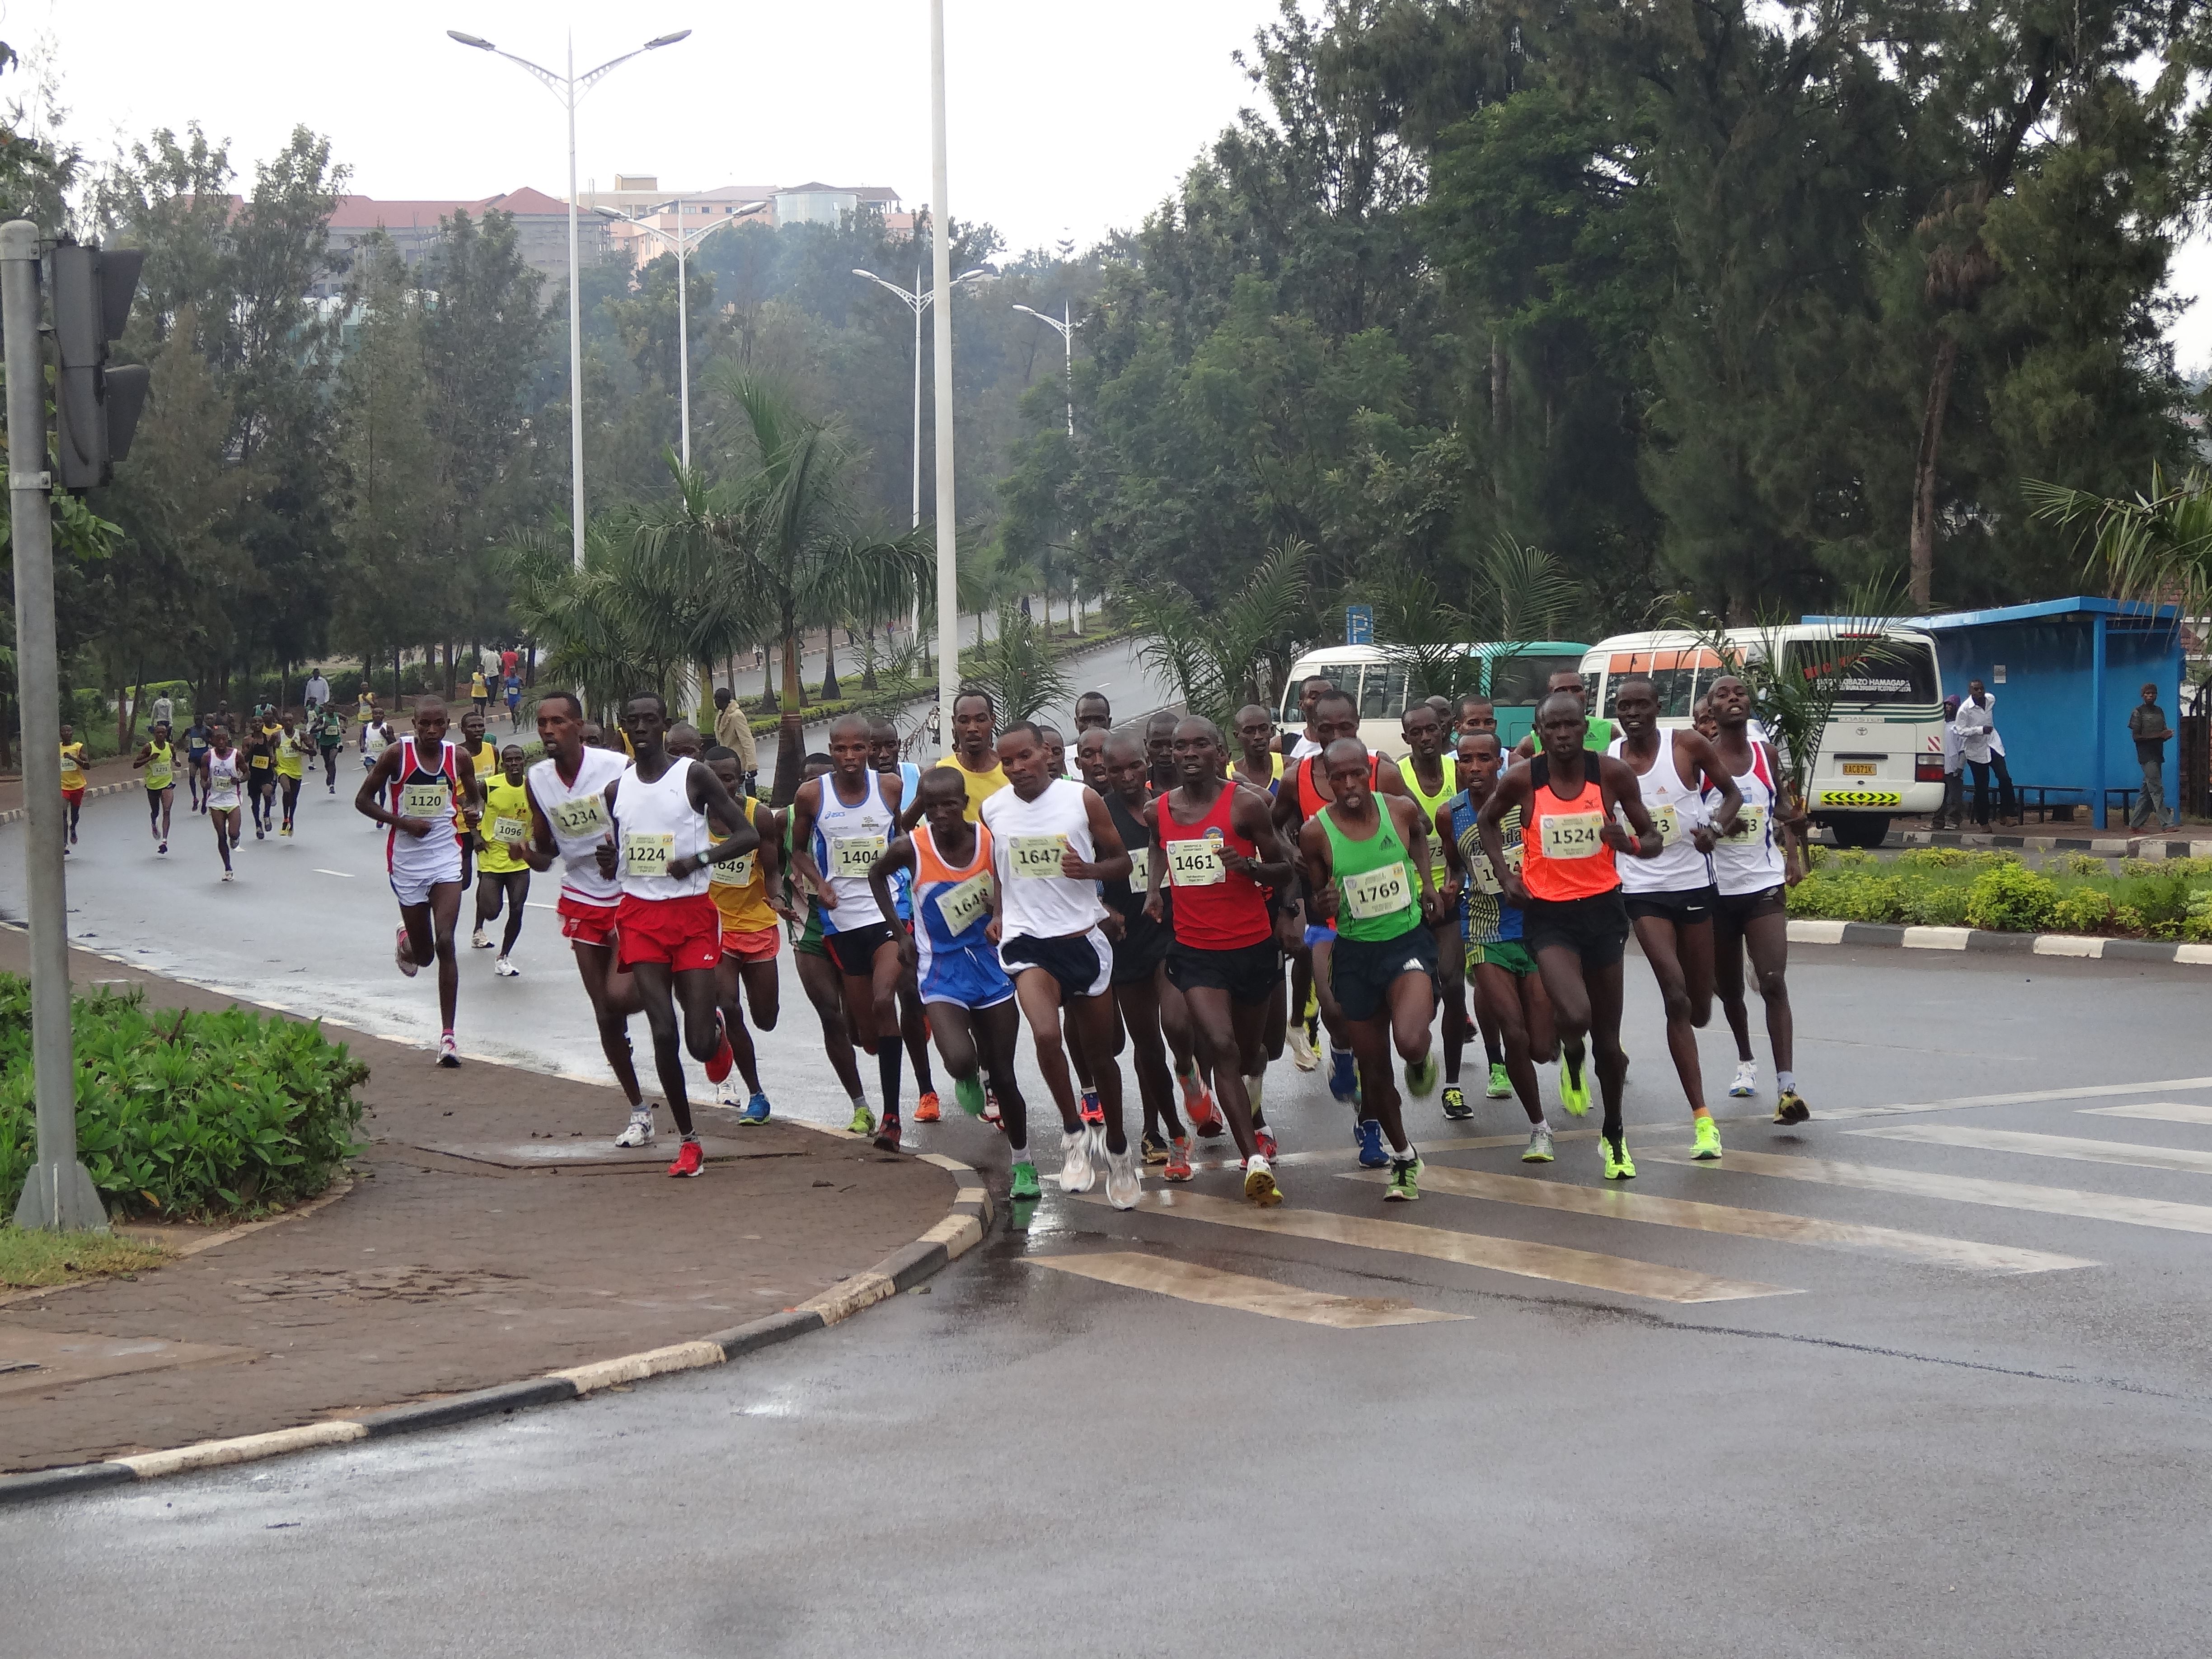 kigali peace marathon